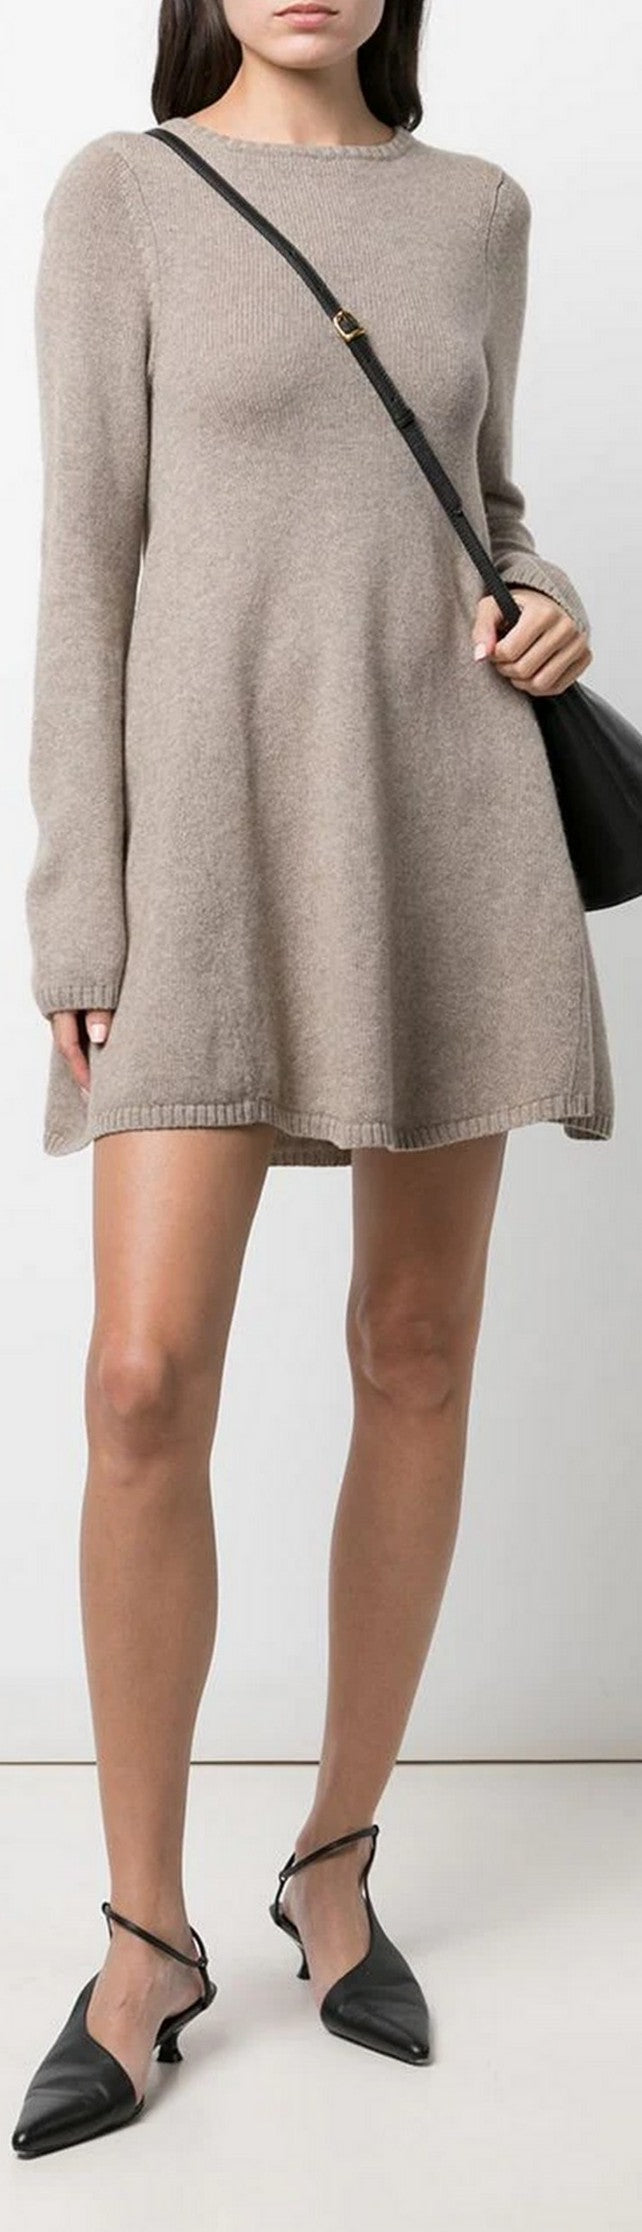 The Fleurine Cashmere Mini Dress